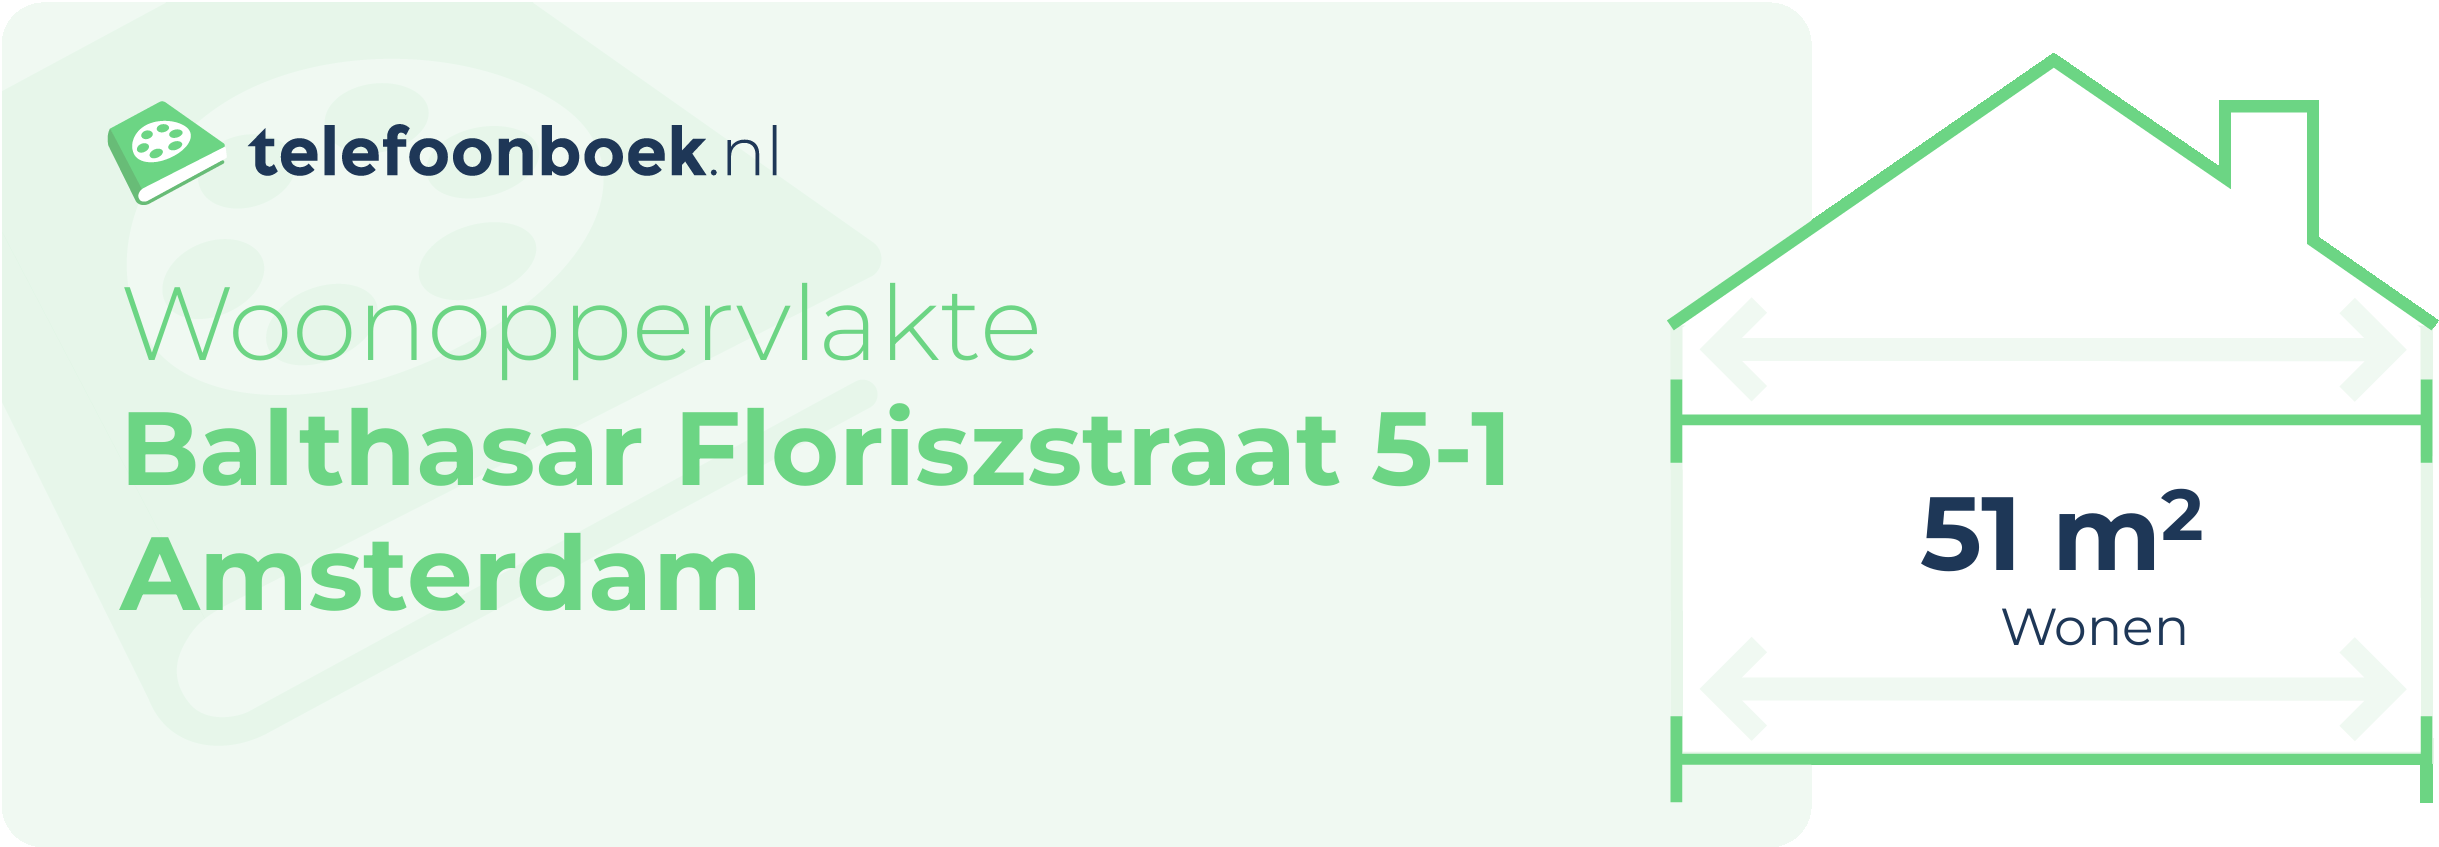 Woonoppervlakte Balthasar Floriszstraat 5-1 Amsterdam